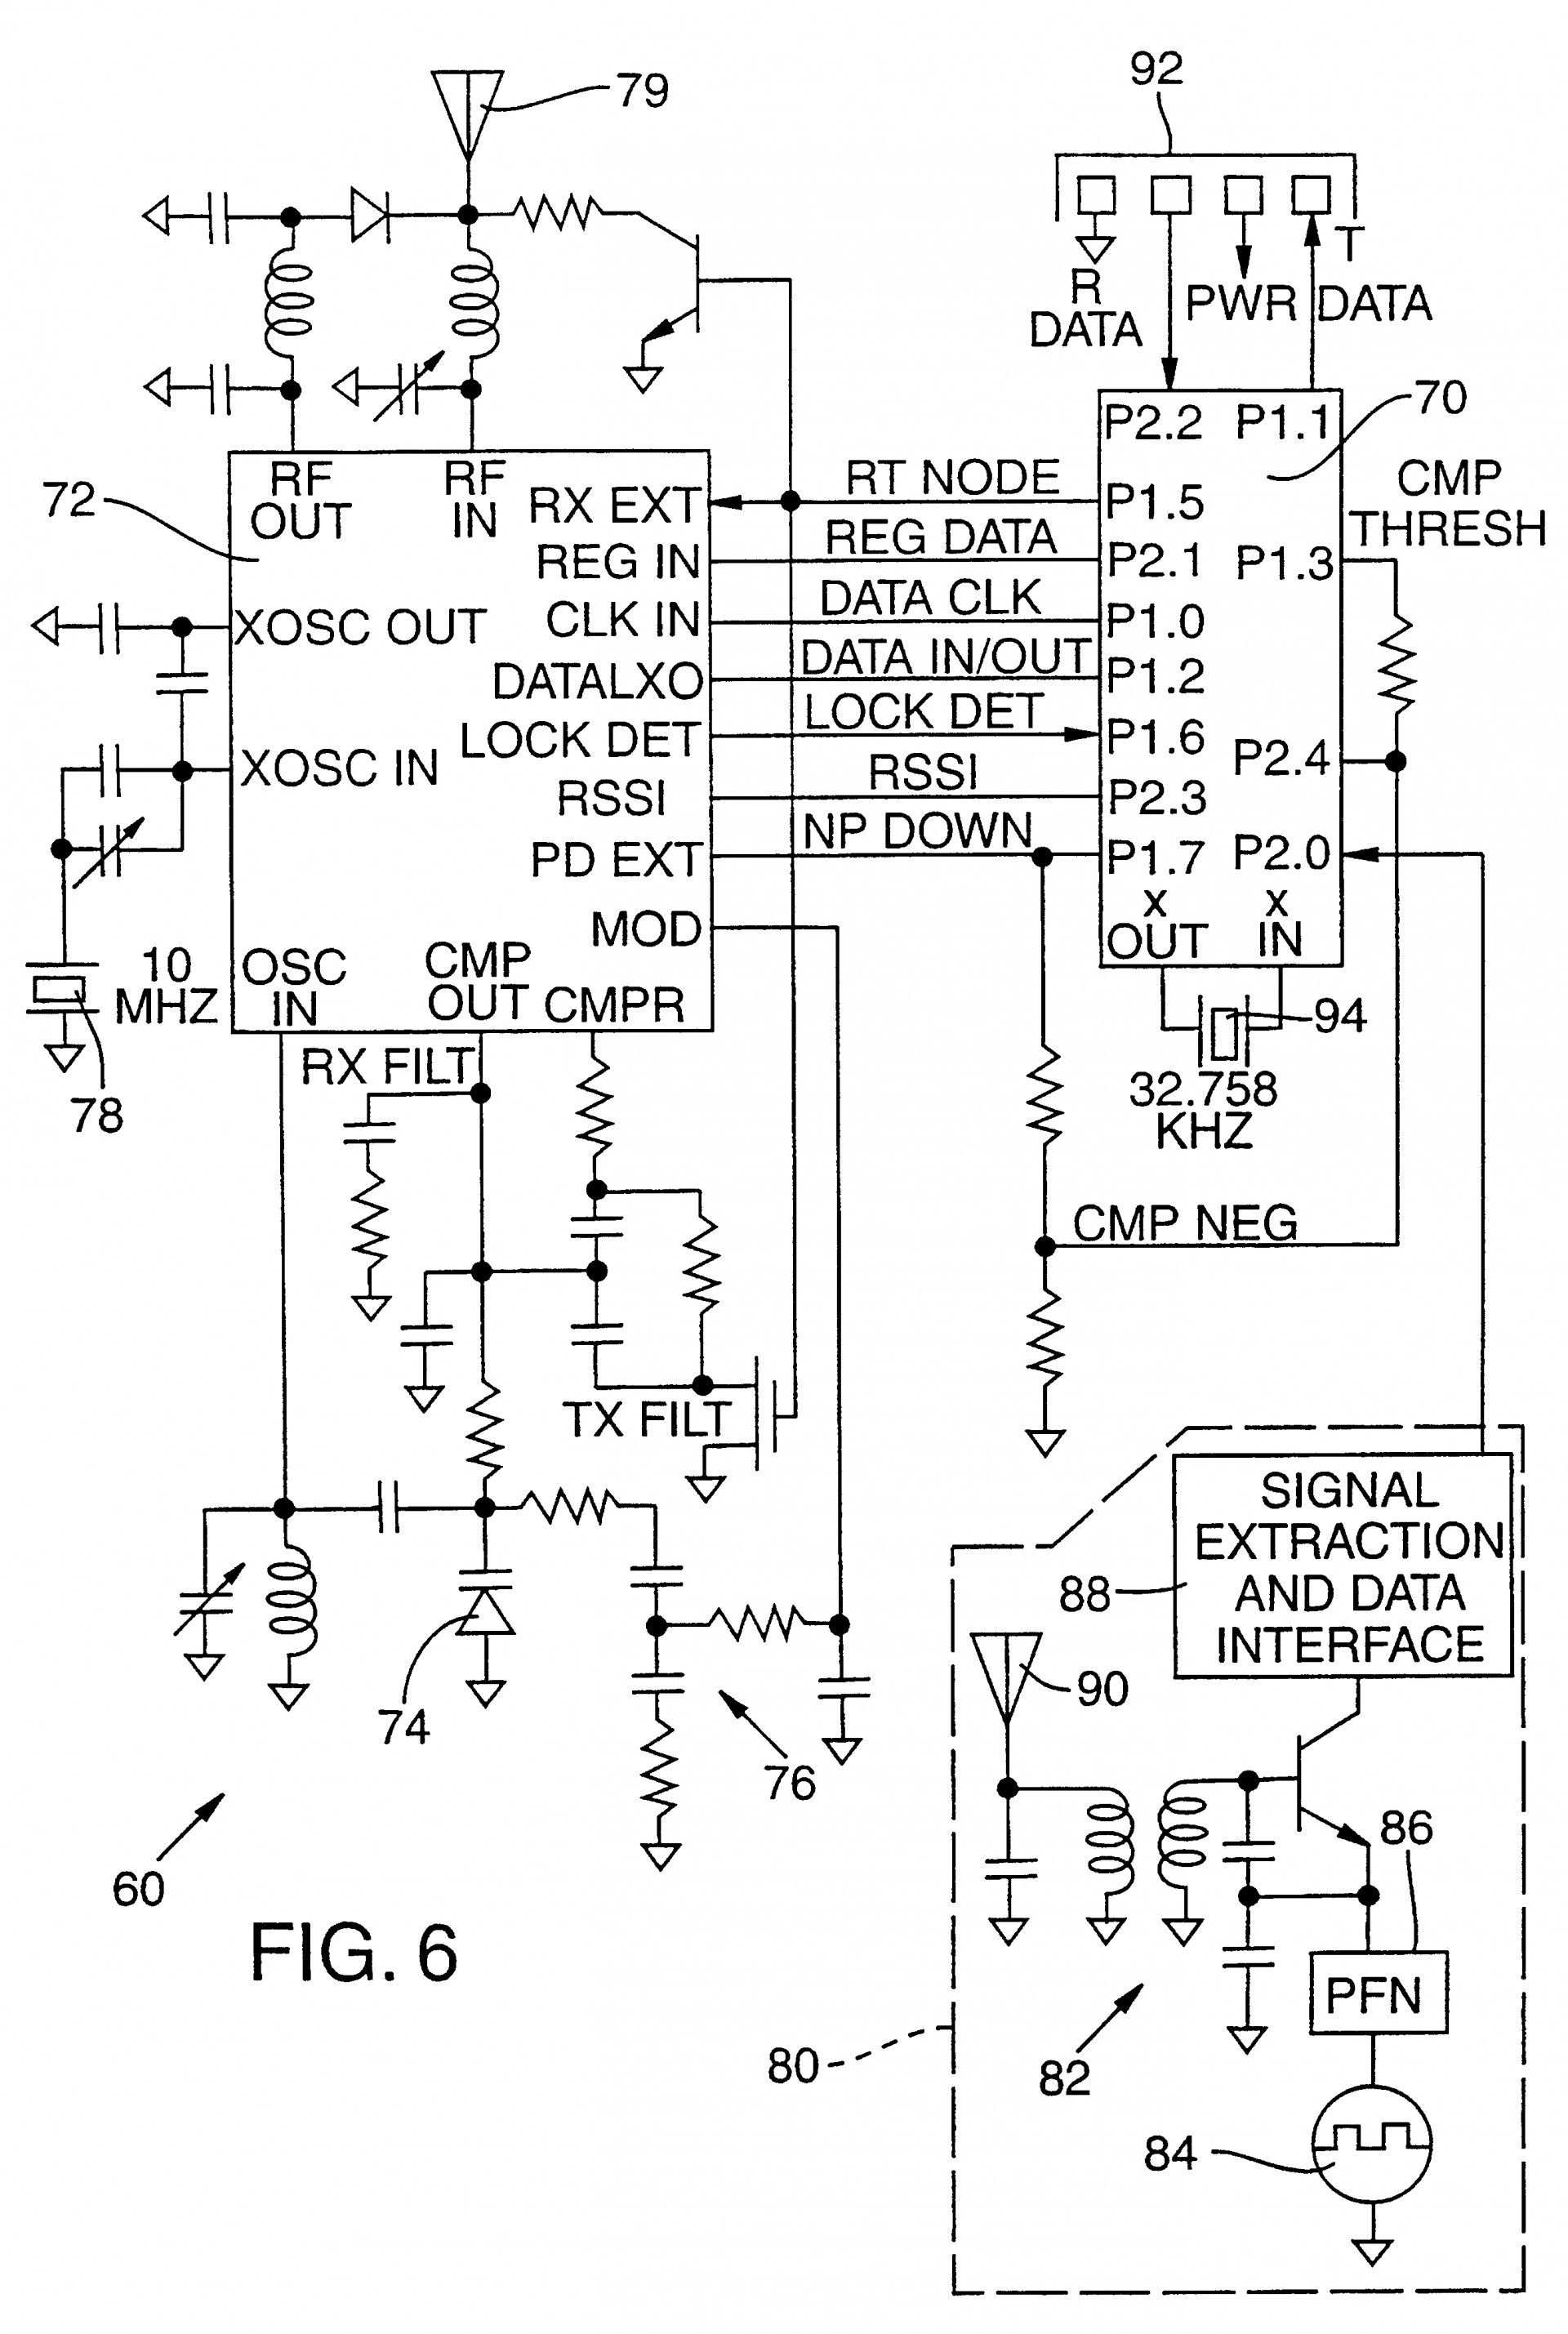 Logitech Z 640 Pin Vga Wire Diagram Wiring Diagrams T101p Wiring Diagram Diagrams Instructions